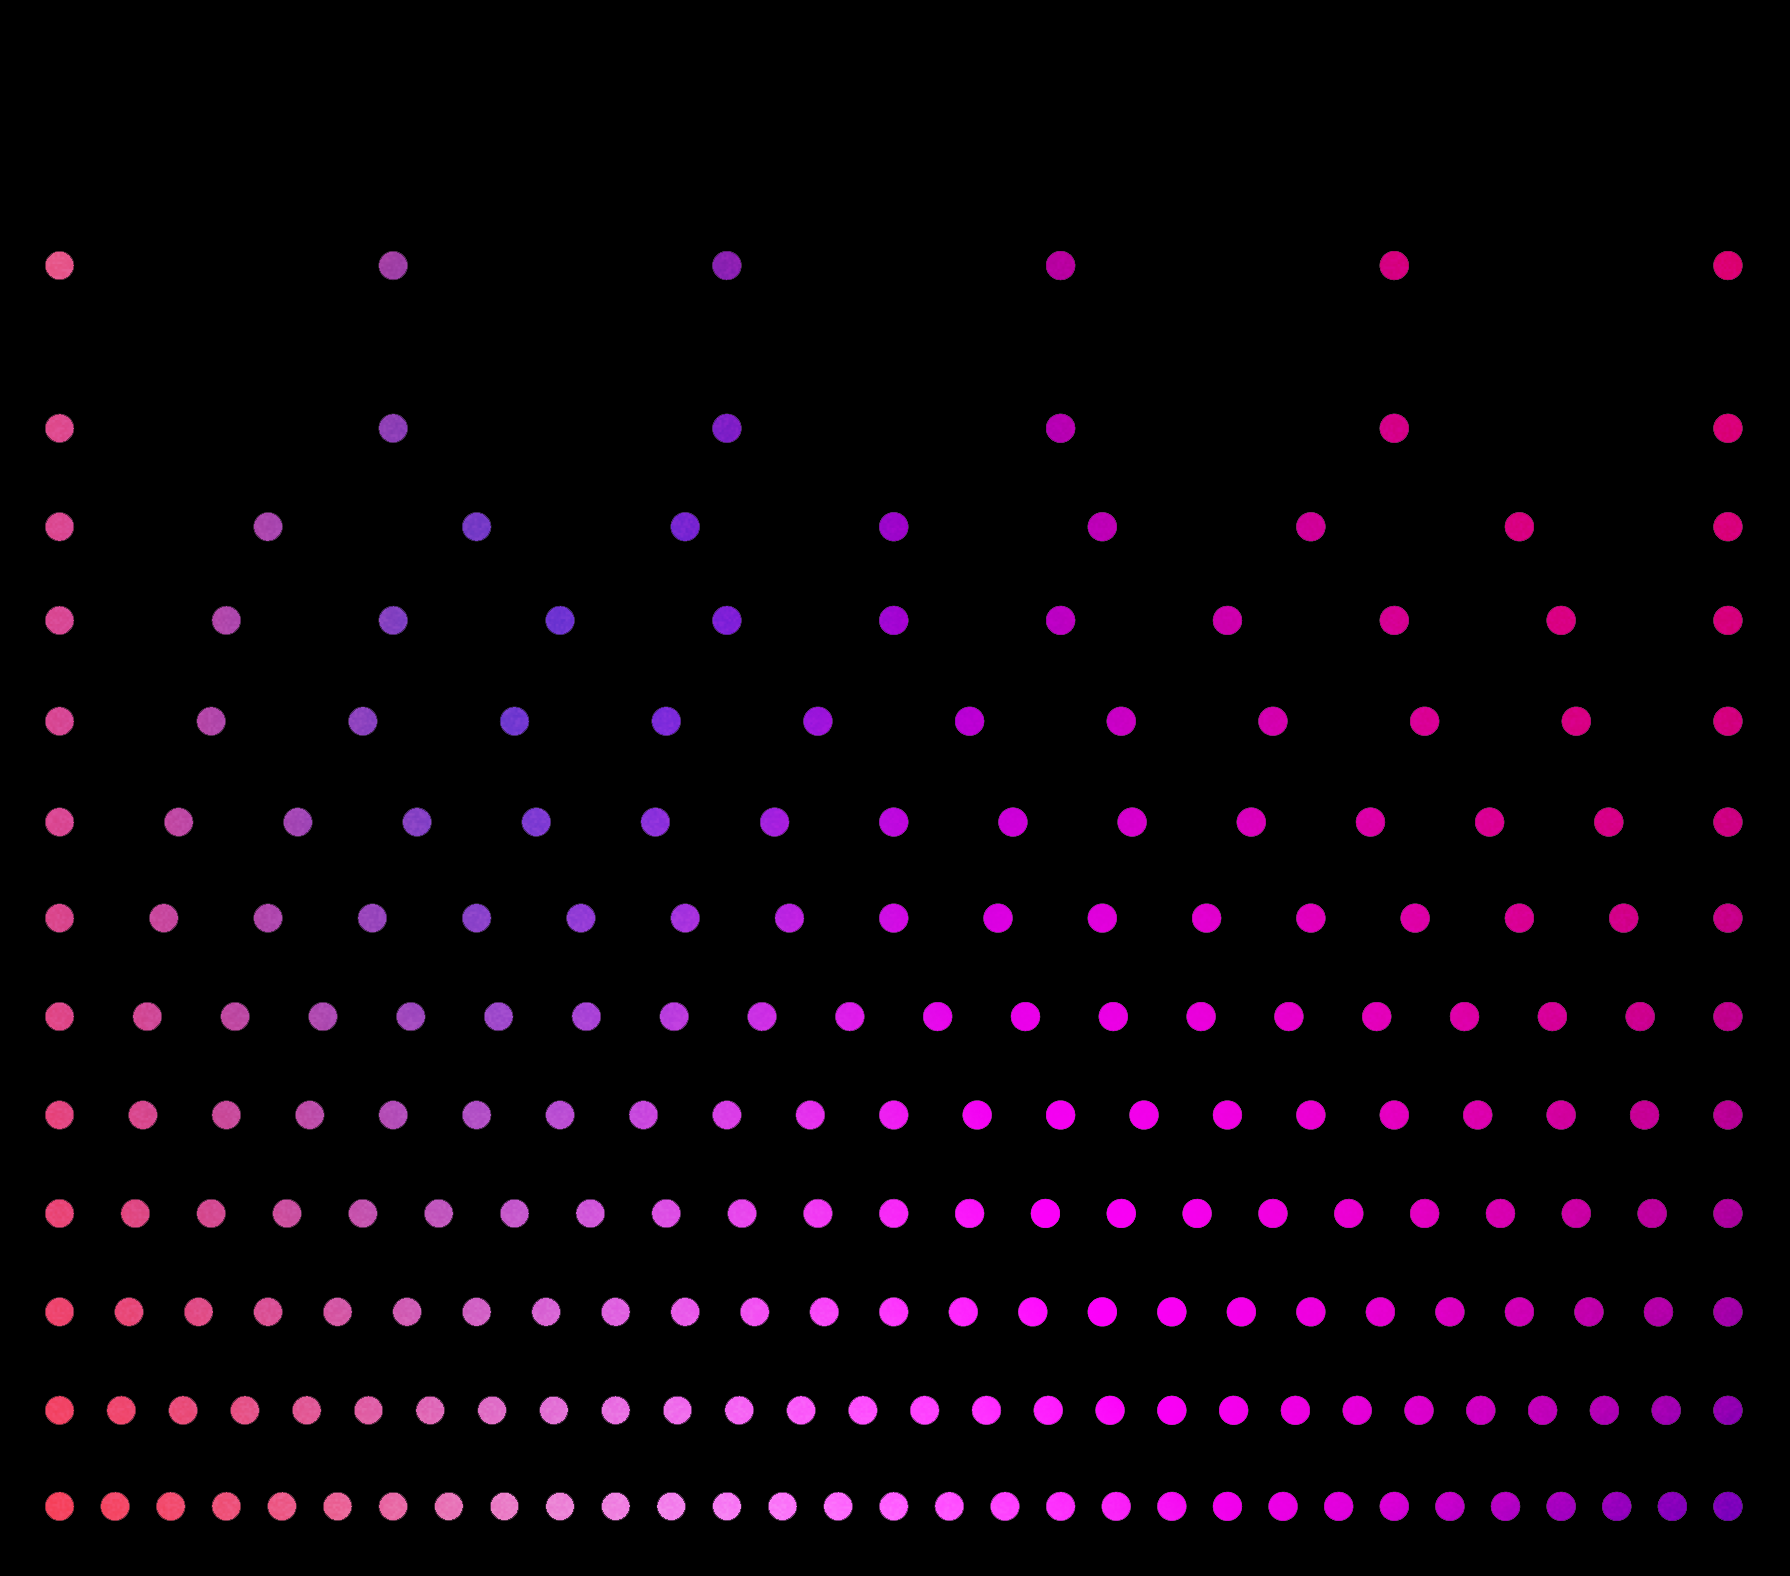 Header illustration with data